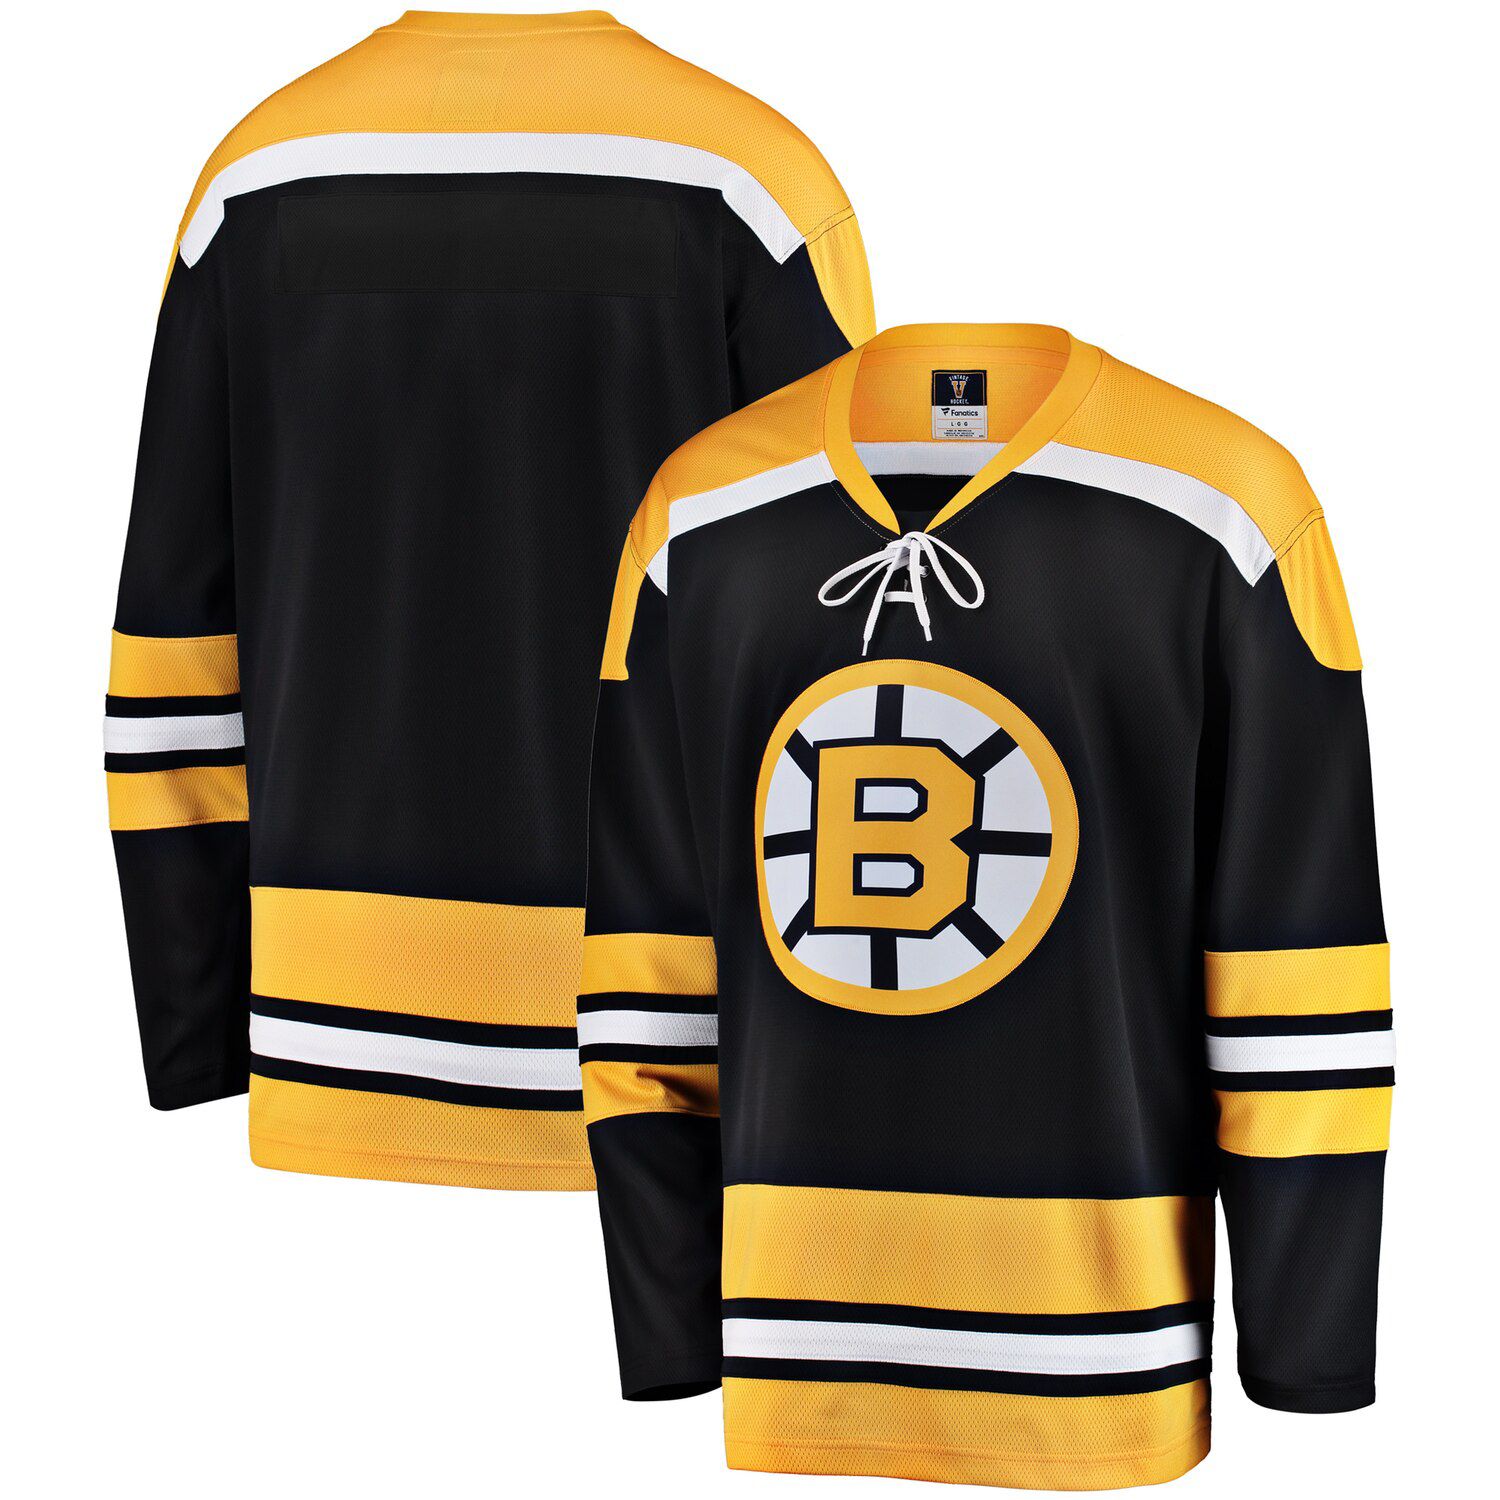 Reebok Women's Premier NHL Jersey Boston Bruins Milan Lucic Black